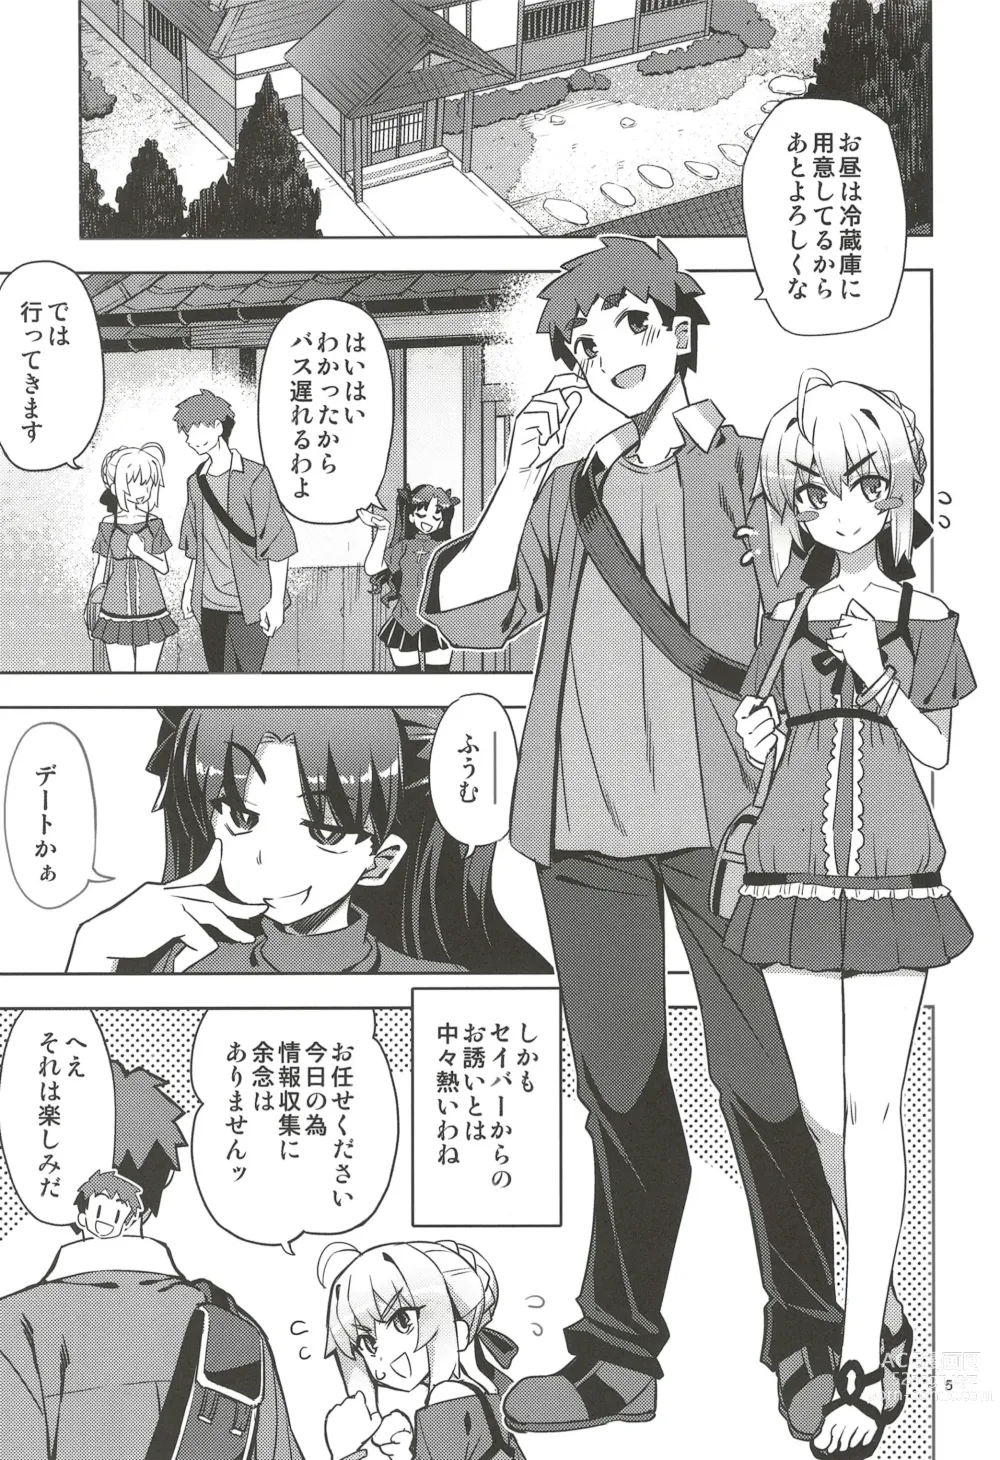 Page 5 of doujinshi RE32